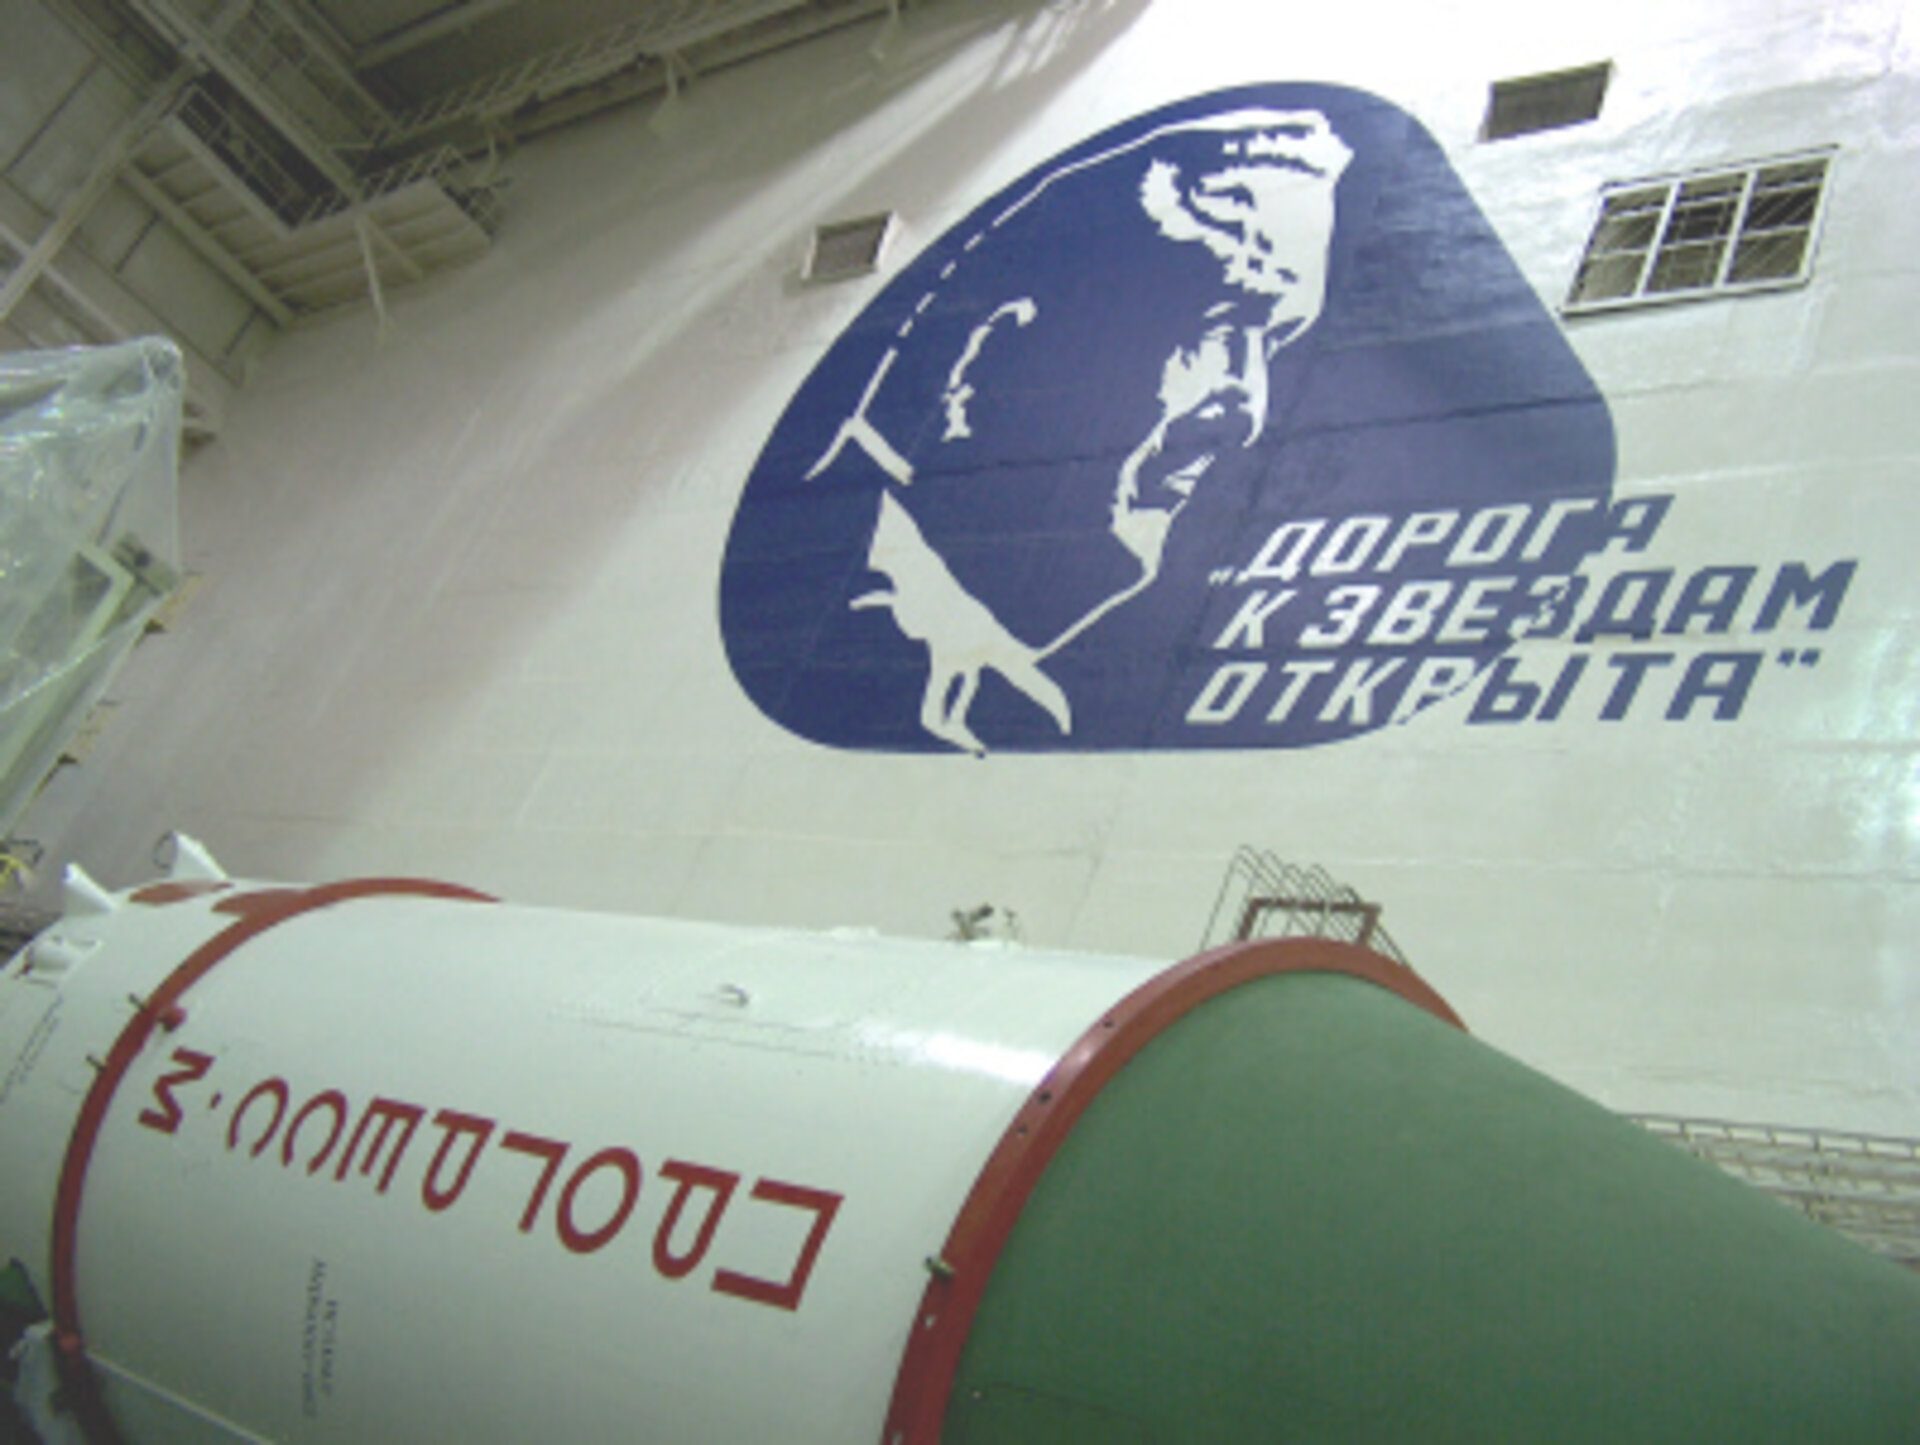 Soyuz and Progress integration hall in Baikonour